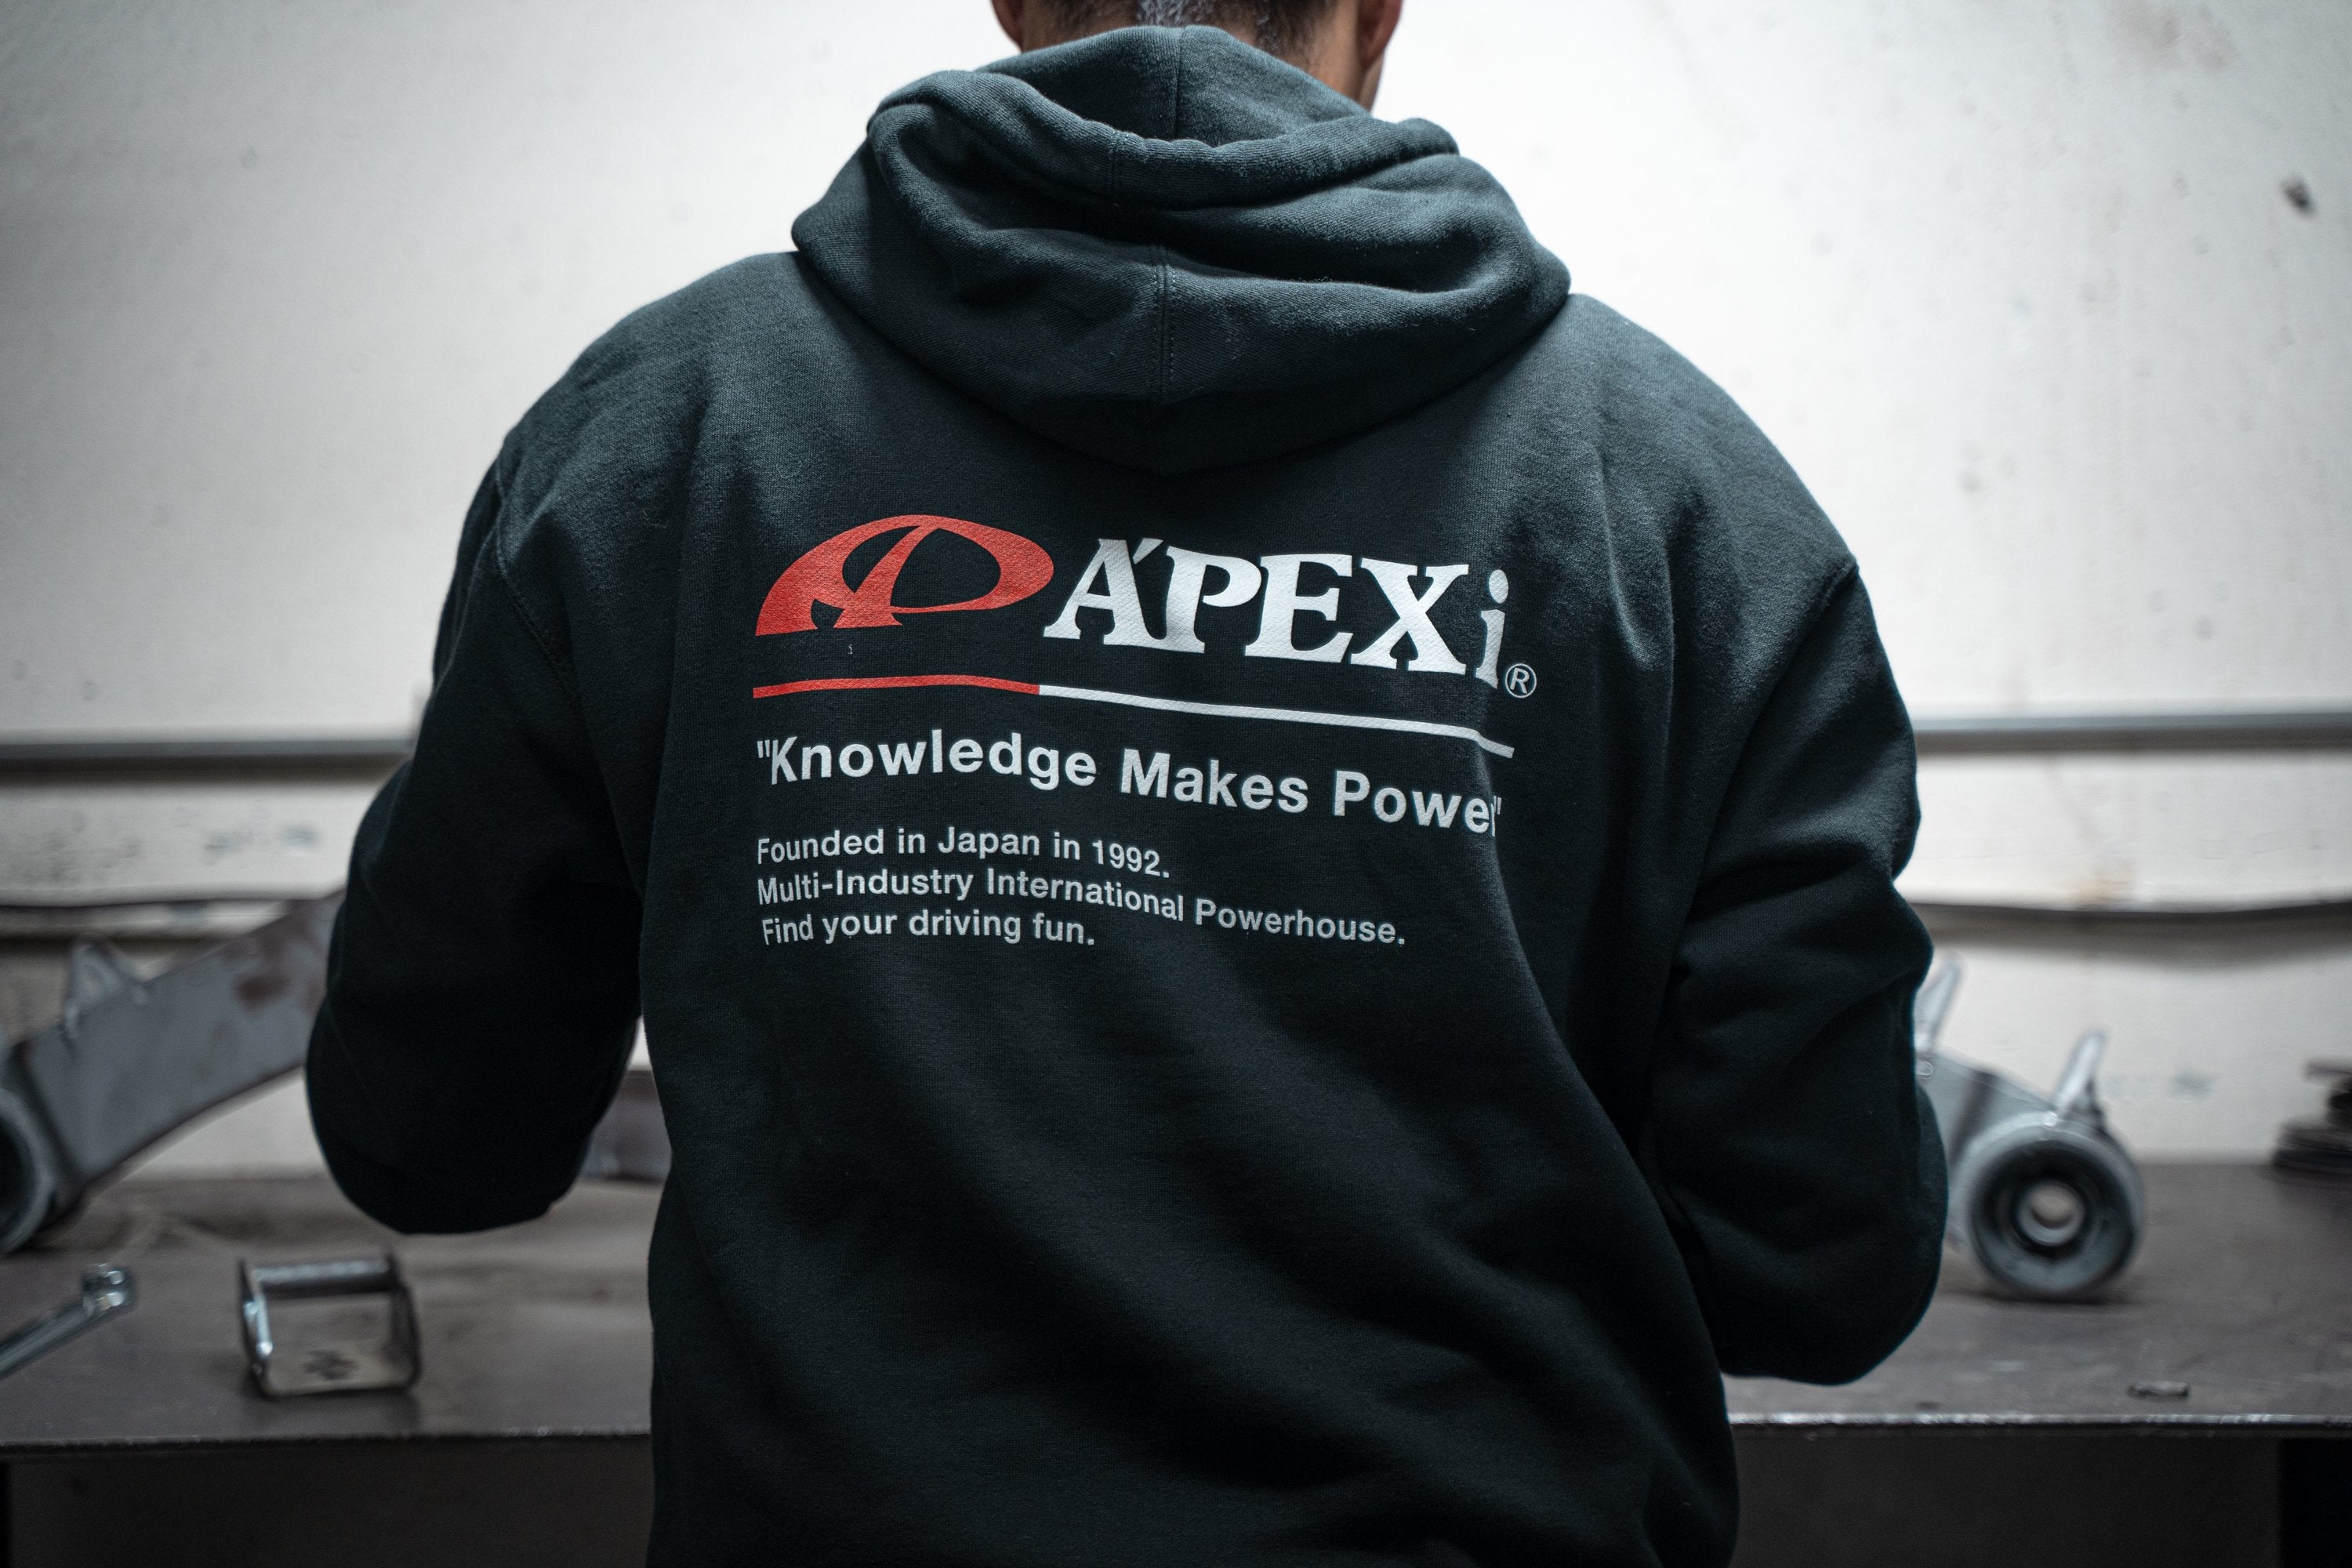 Apexi A'PEXi Hoodie - Classic Knowledge Makes Power - Black